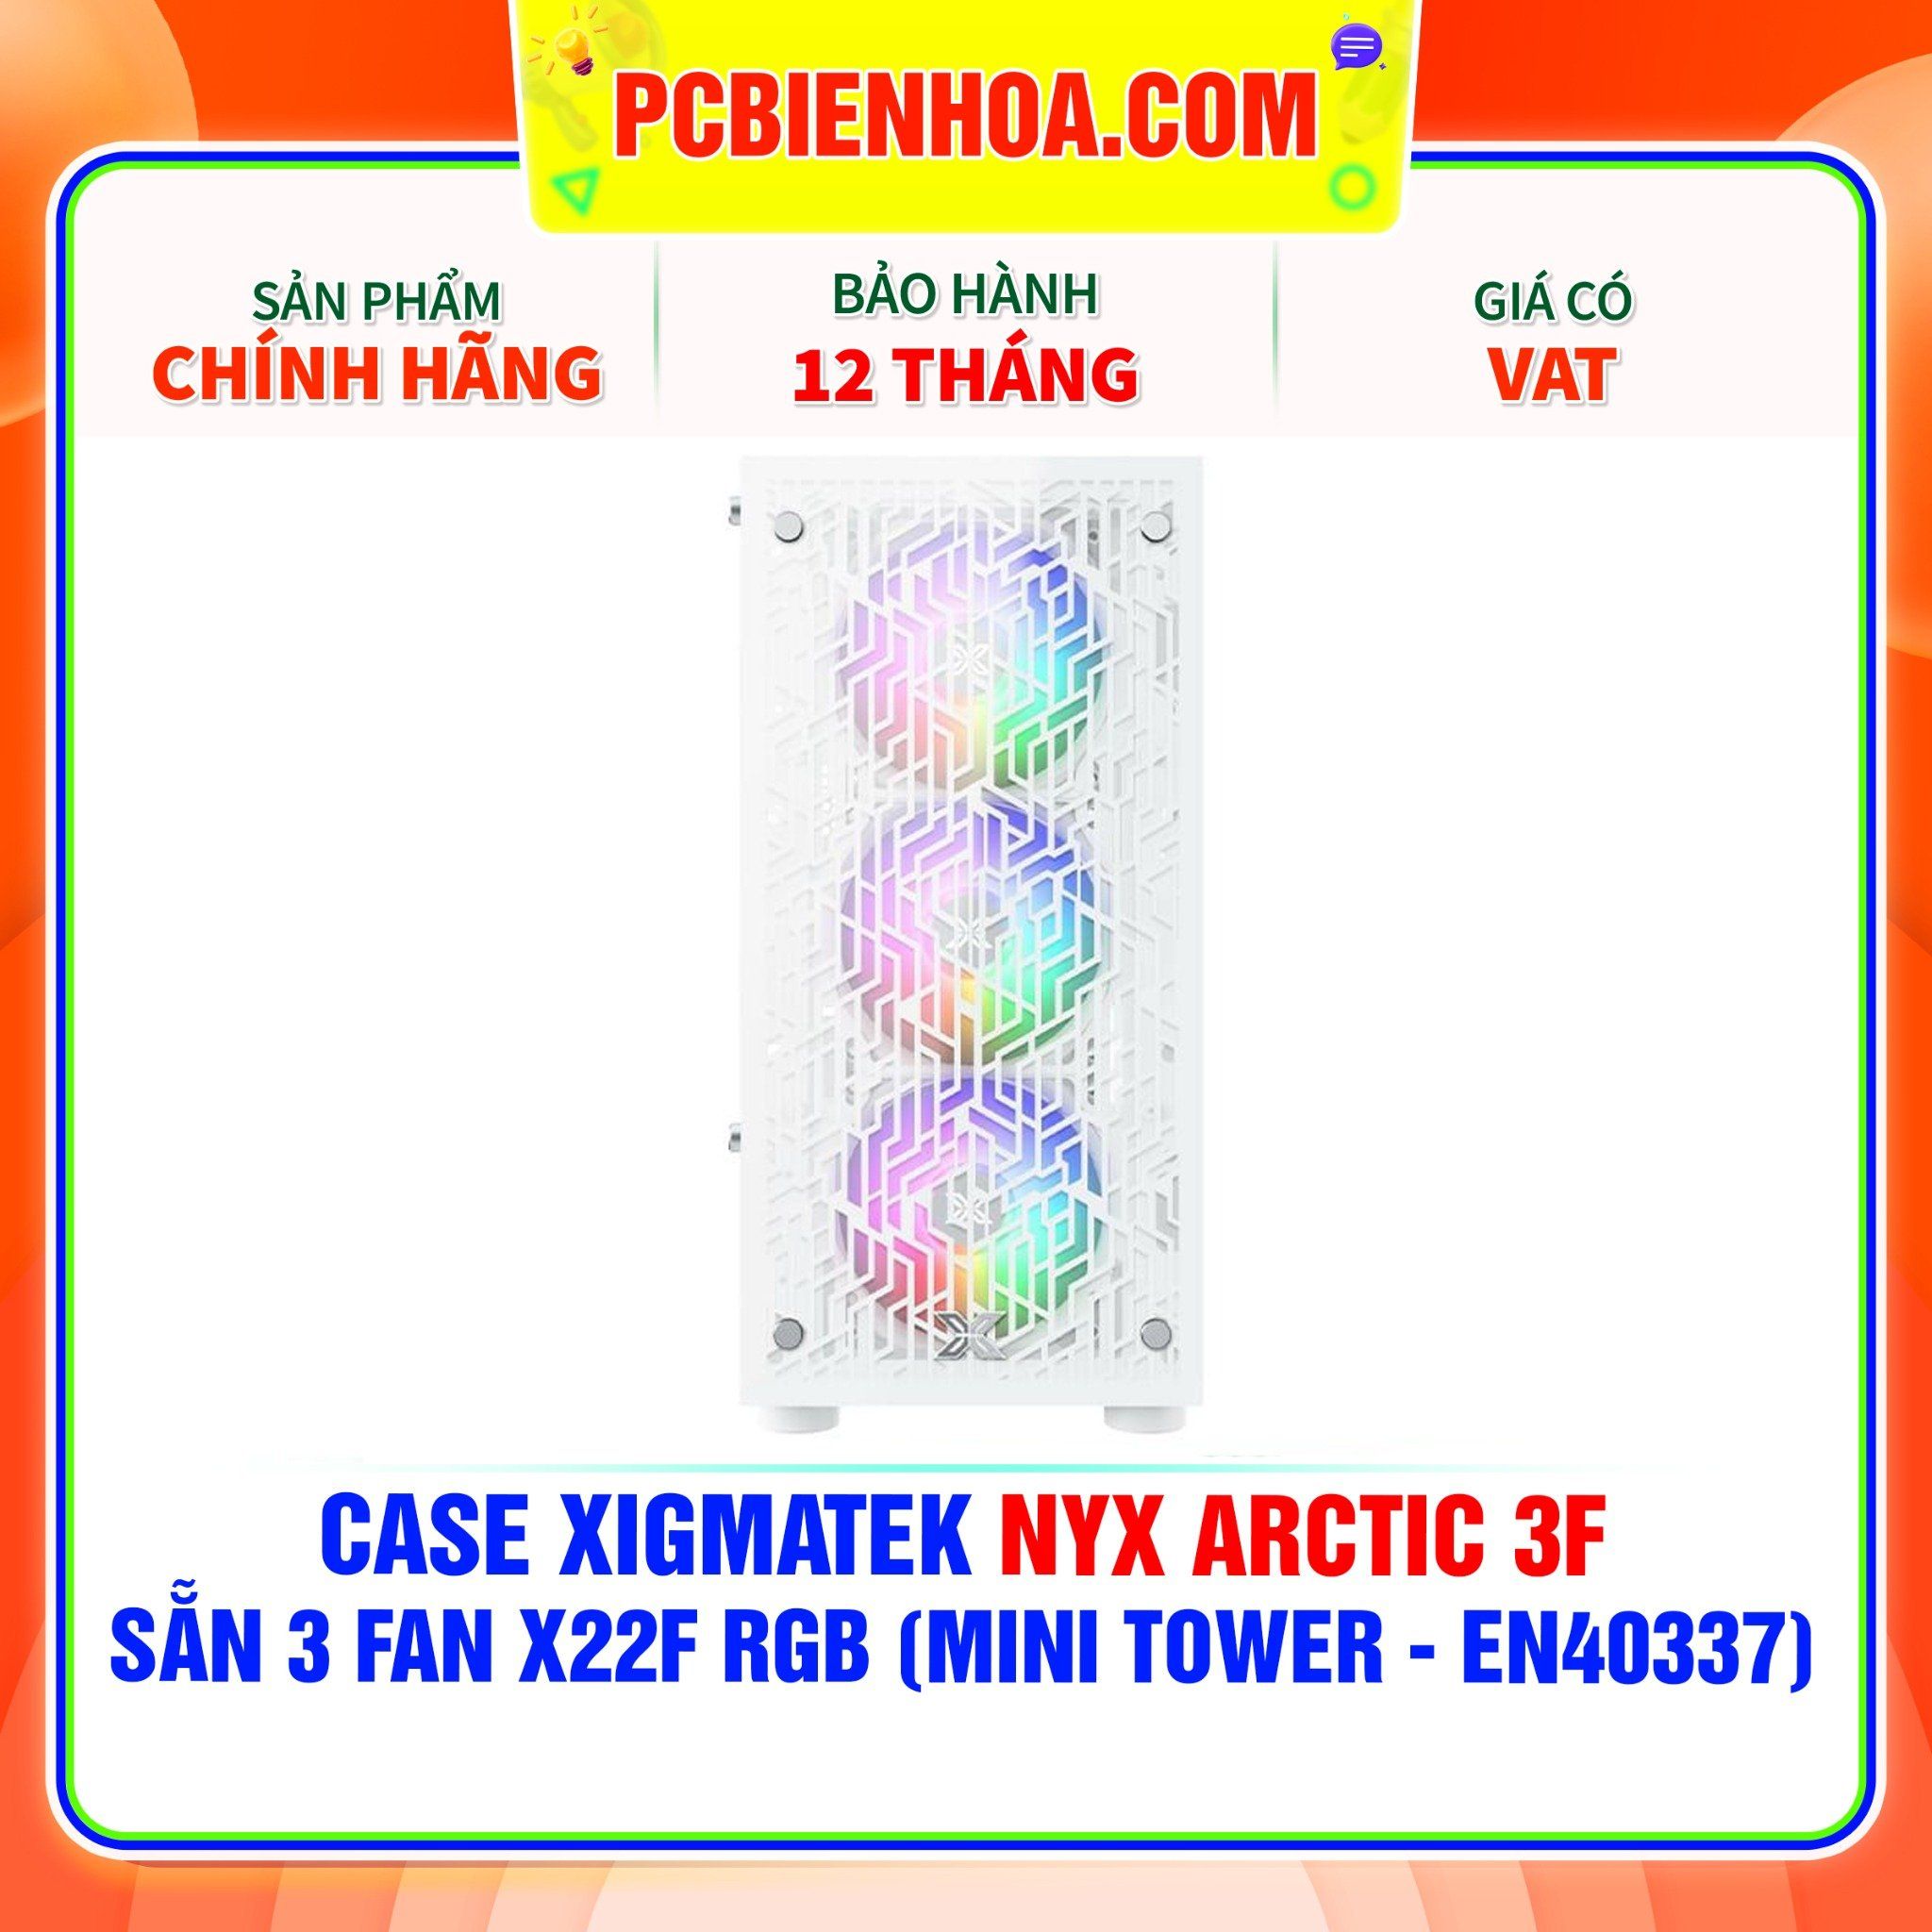  CASE XIGMATEK NYX ARCTIC 3F - SẴN 3 FAN X22F RGB ( MINI TOWER - EN40337 ) 